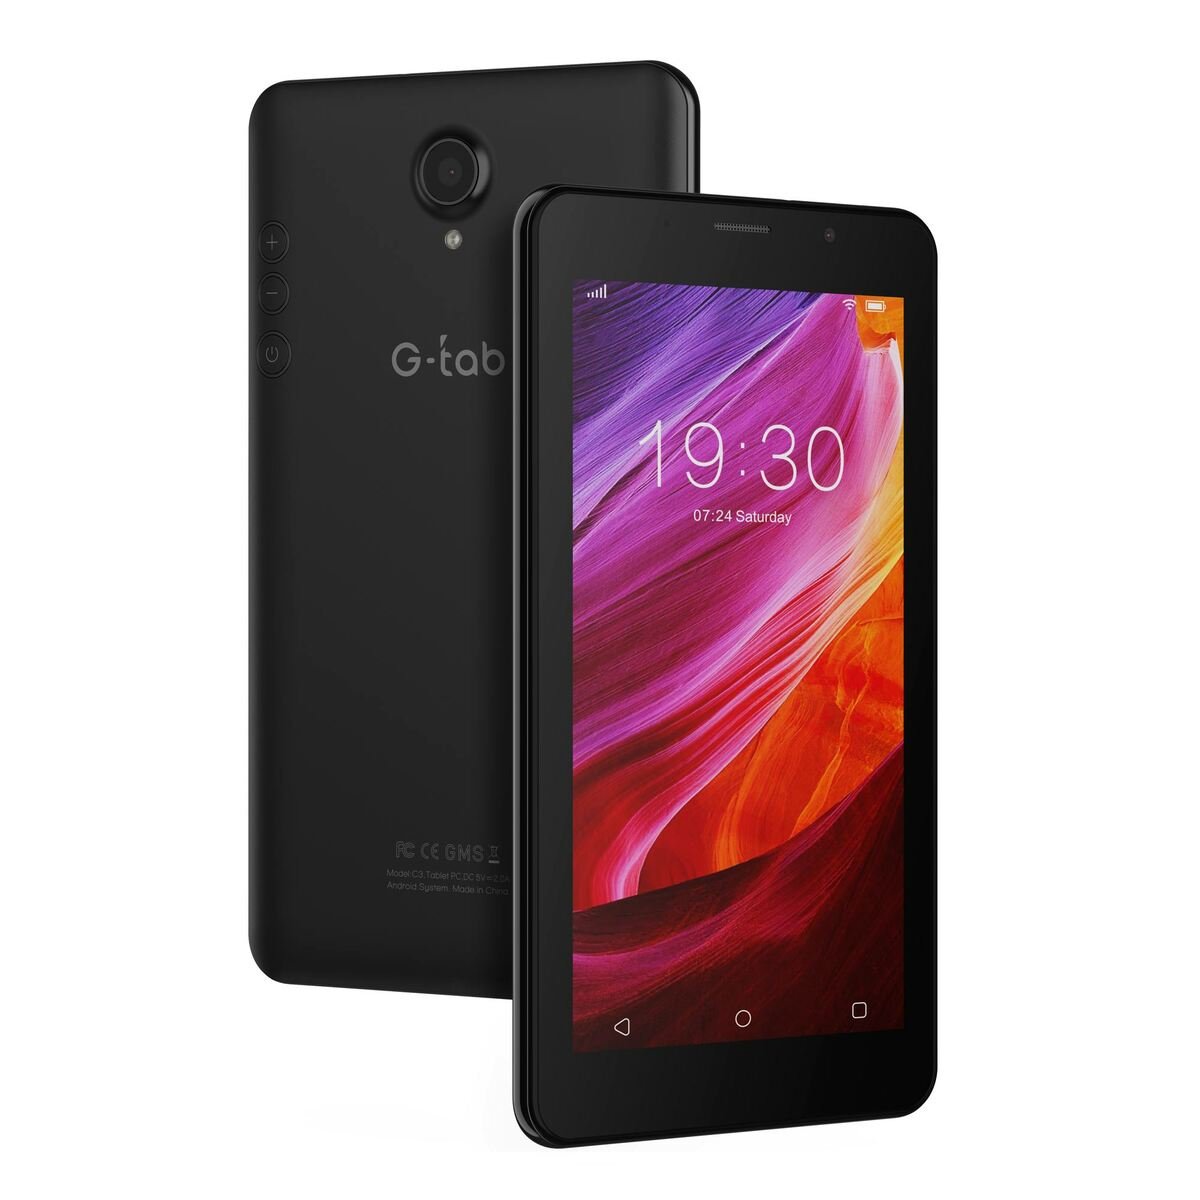 G-tab Tablet C3, 3G, Quad-core, 1GB RAM, 16GB Memory, 7.0 inches Display, Android, Black